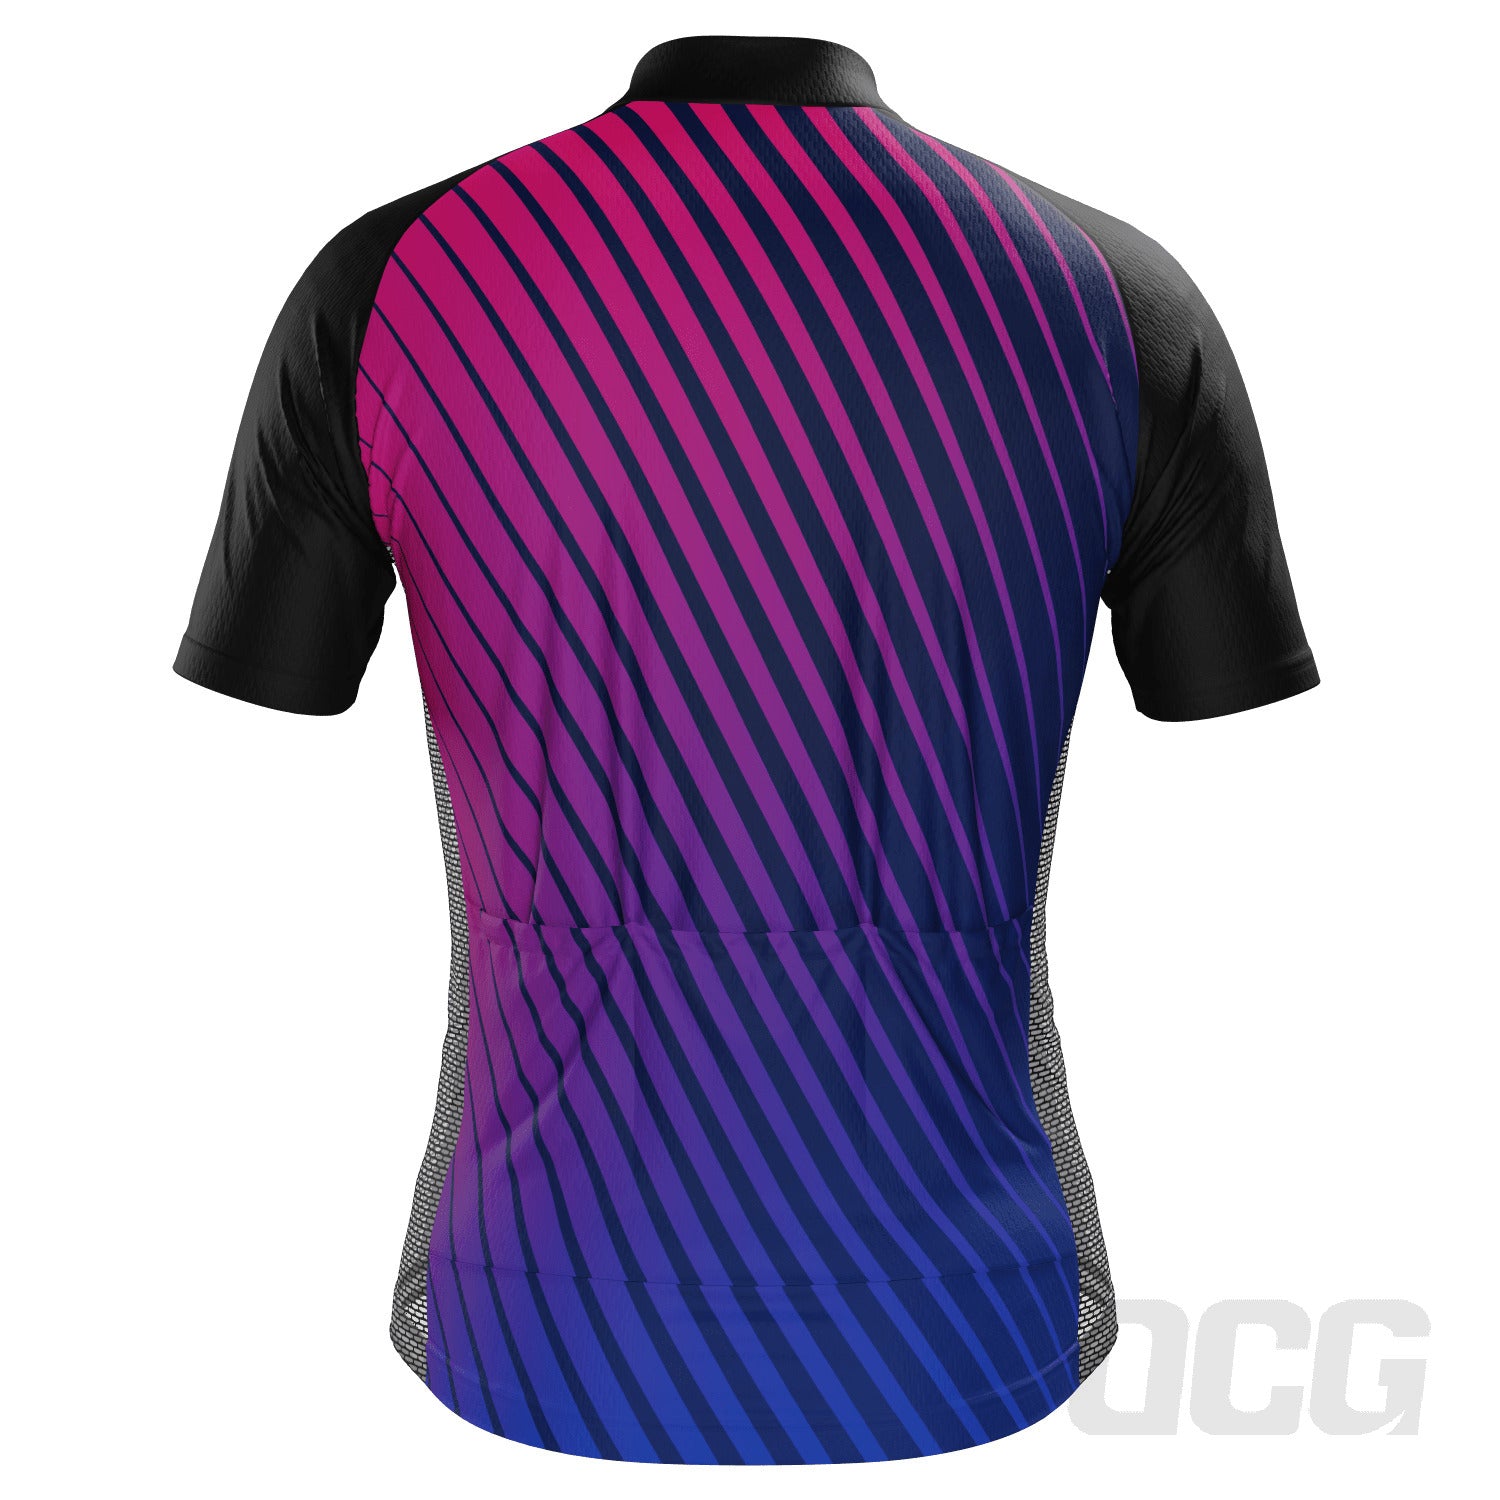 Men's Disco Stripes Short Sleeve Cycling Jersey